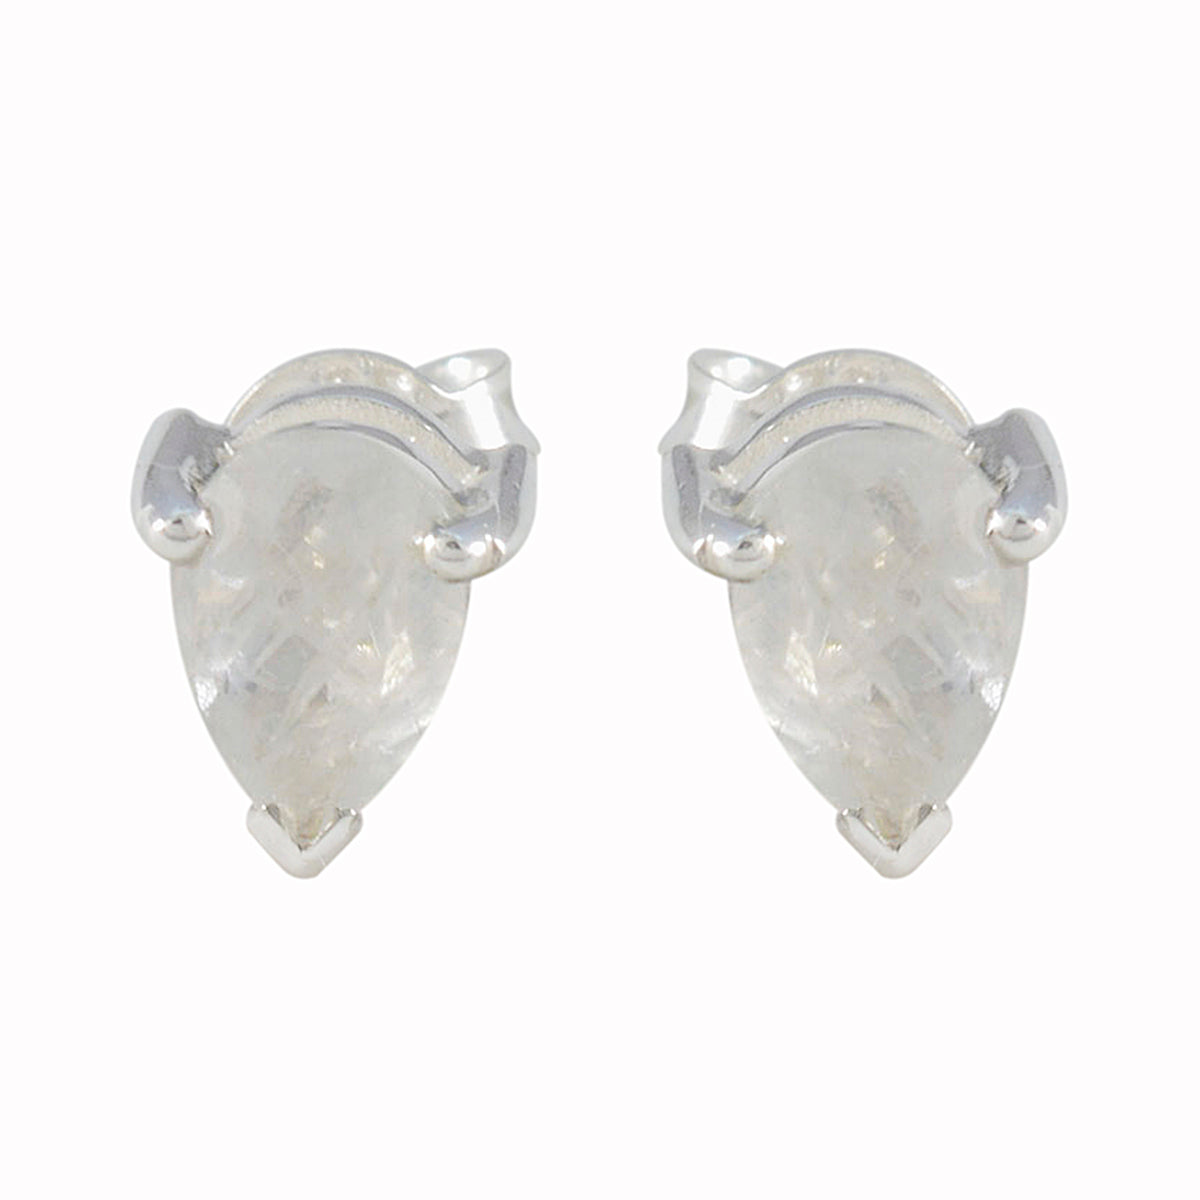 Riyo Bewitching 925 Sterling Silver Earring For Lady Rainbow Moonstone Earring Bezel Setting White Earring Stud Earring